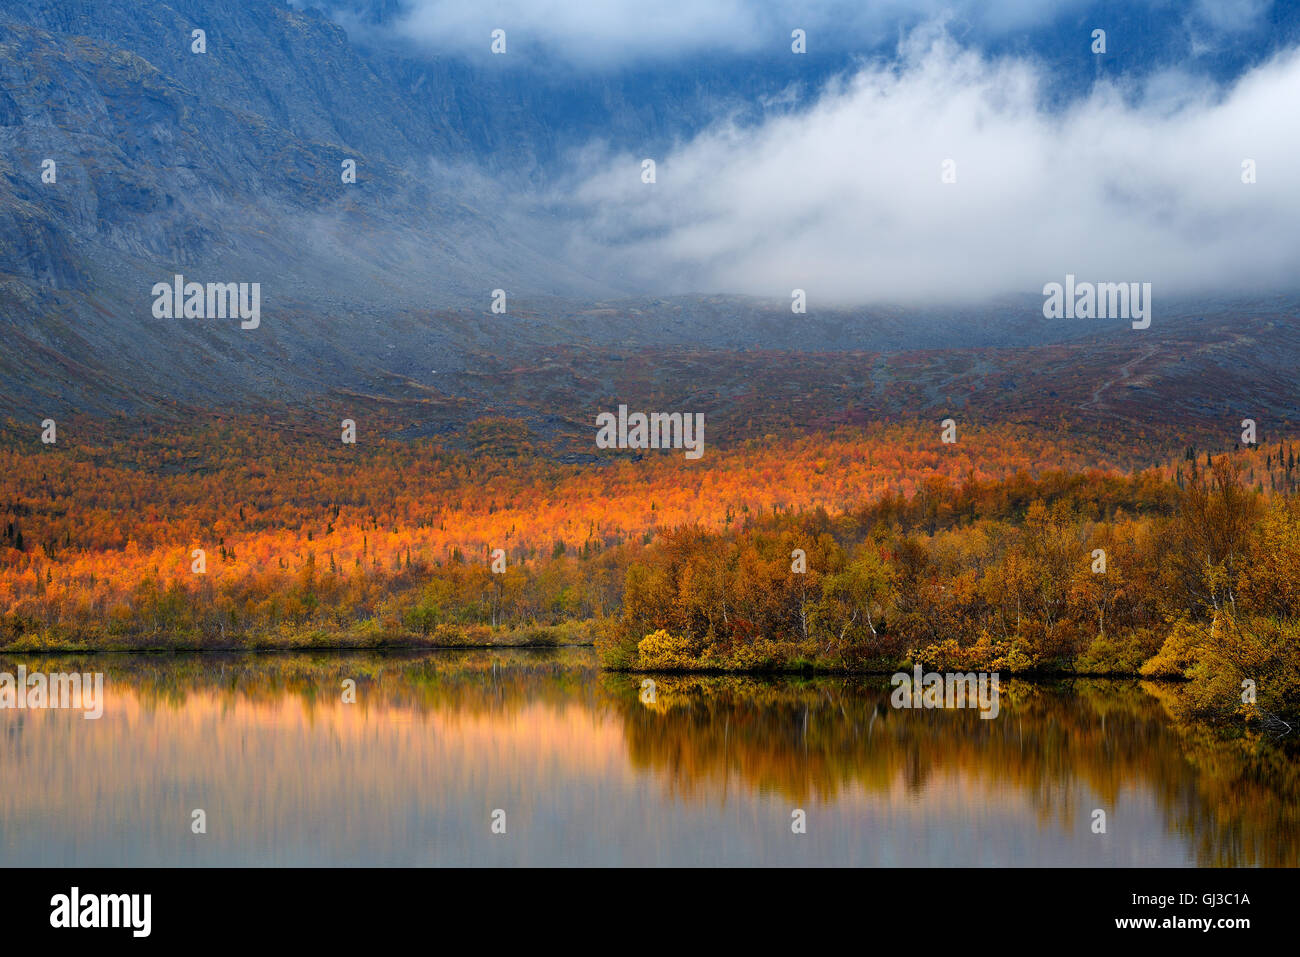 Colore di autunno e bassa cloud a Maliy Vudjavr Lago, Khibiny mountains, penisola di Kola, Russia Foto Stock